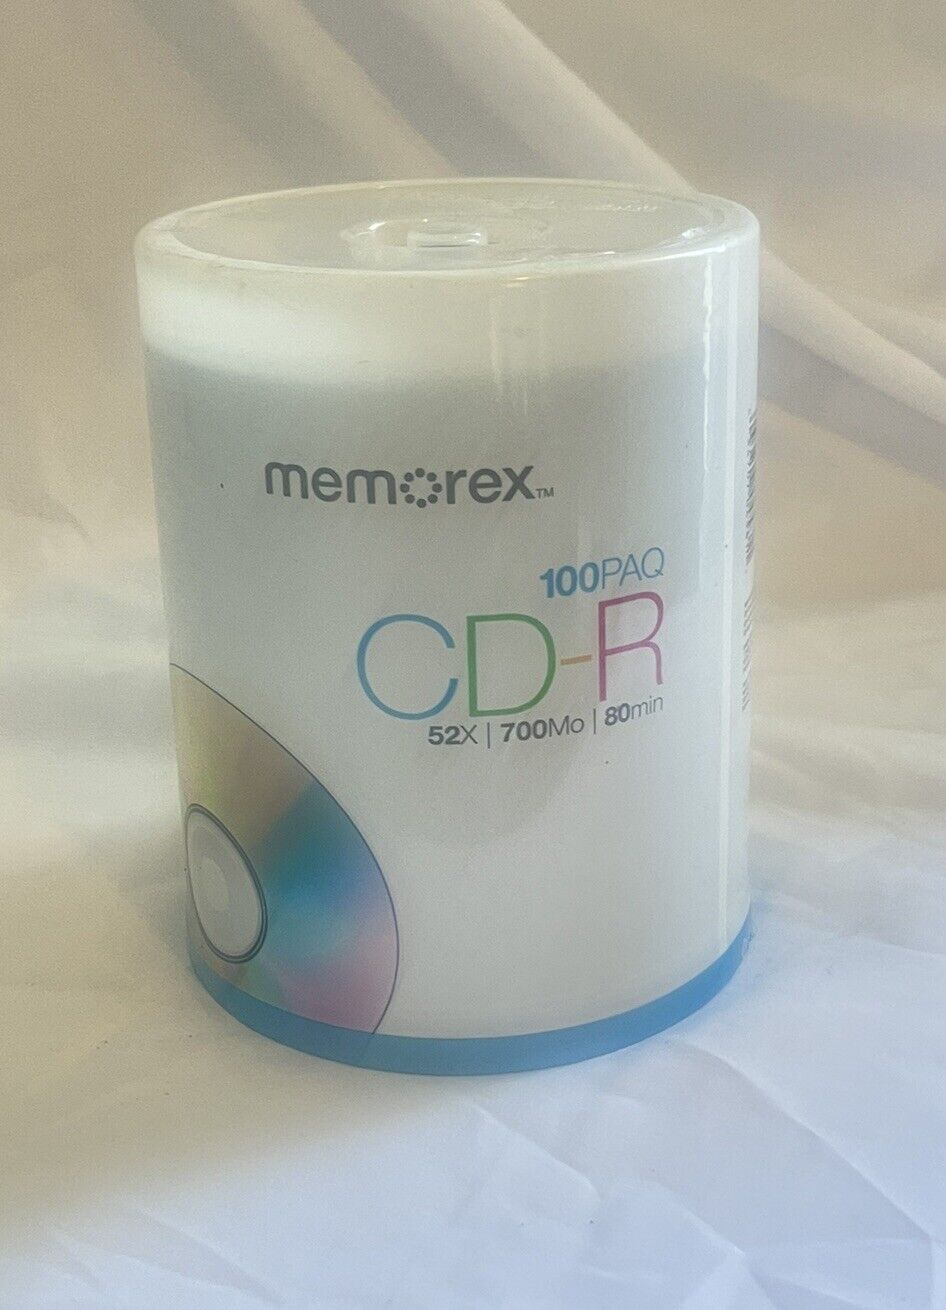 Memorex CD-R 100PK / 52X / 700 MB / 80 Min - New - Sealed